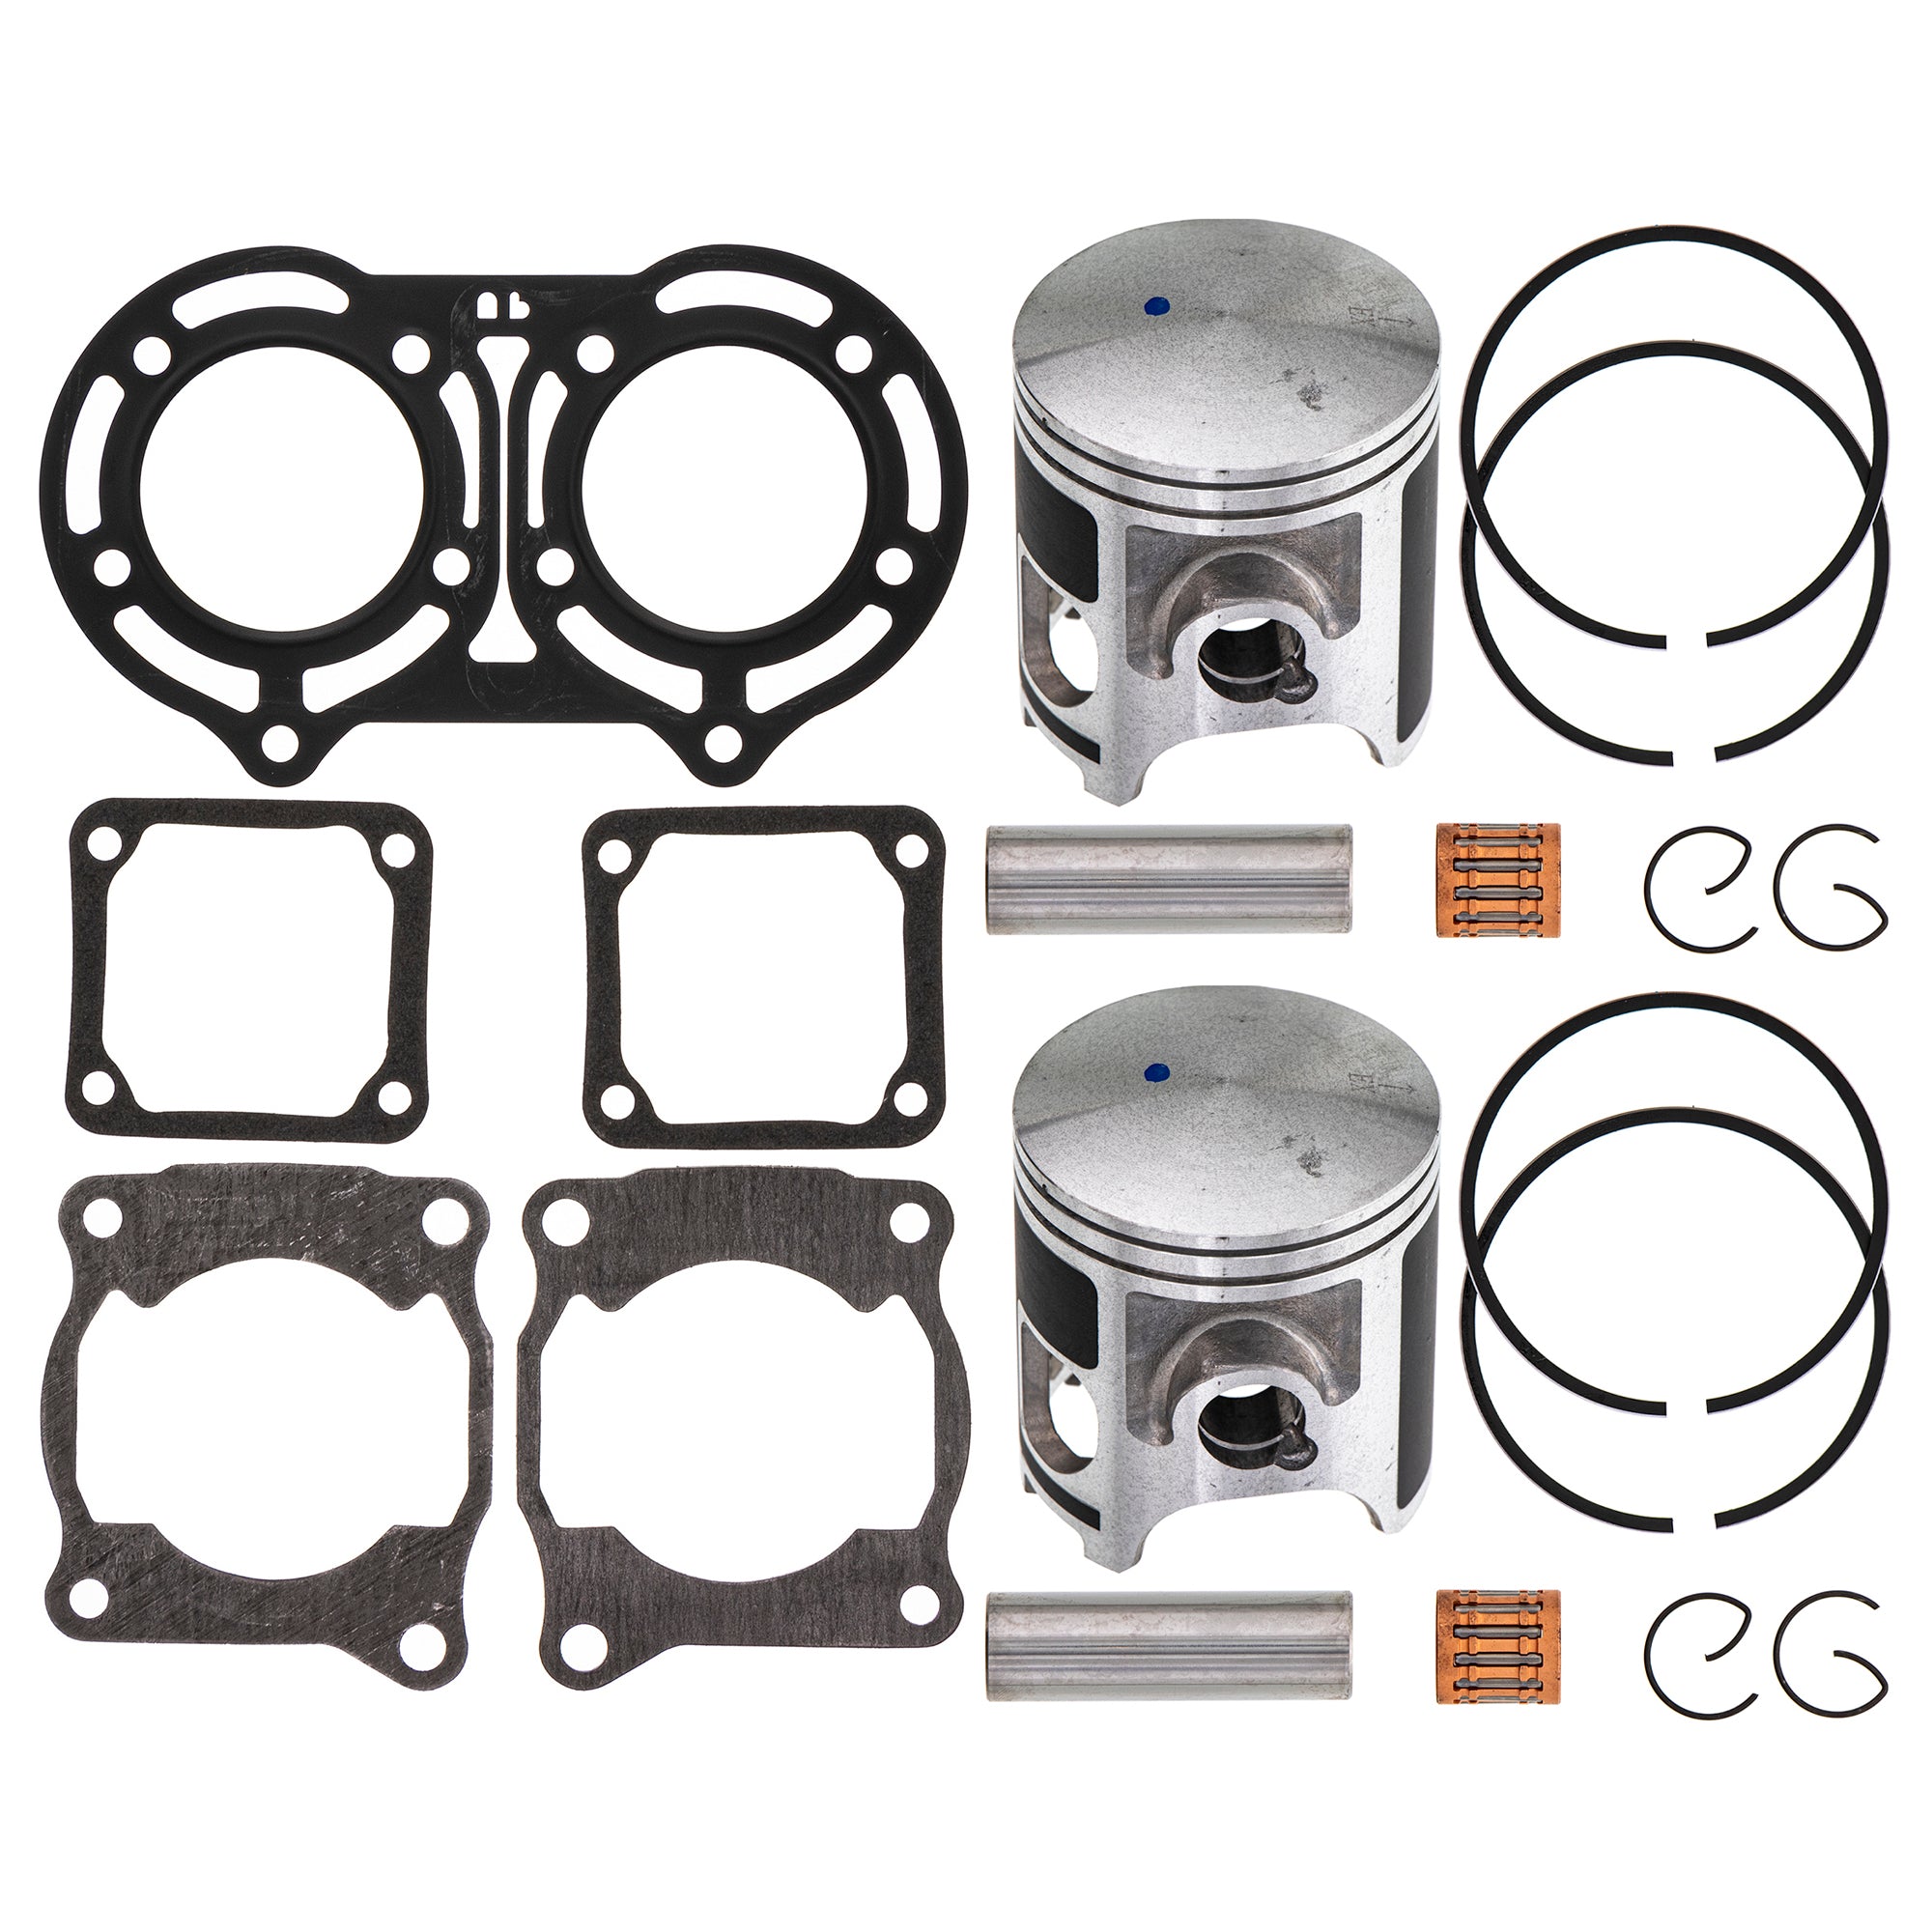 Piston Gasket Ring Top End Kit for Yamaha Banshee 3GG-13621-00-00 3GG-11351-02-00 NICHE MK1001084